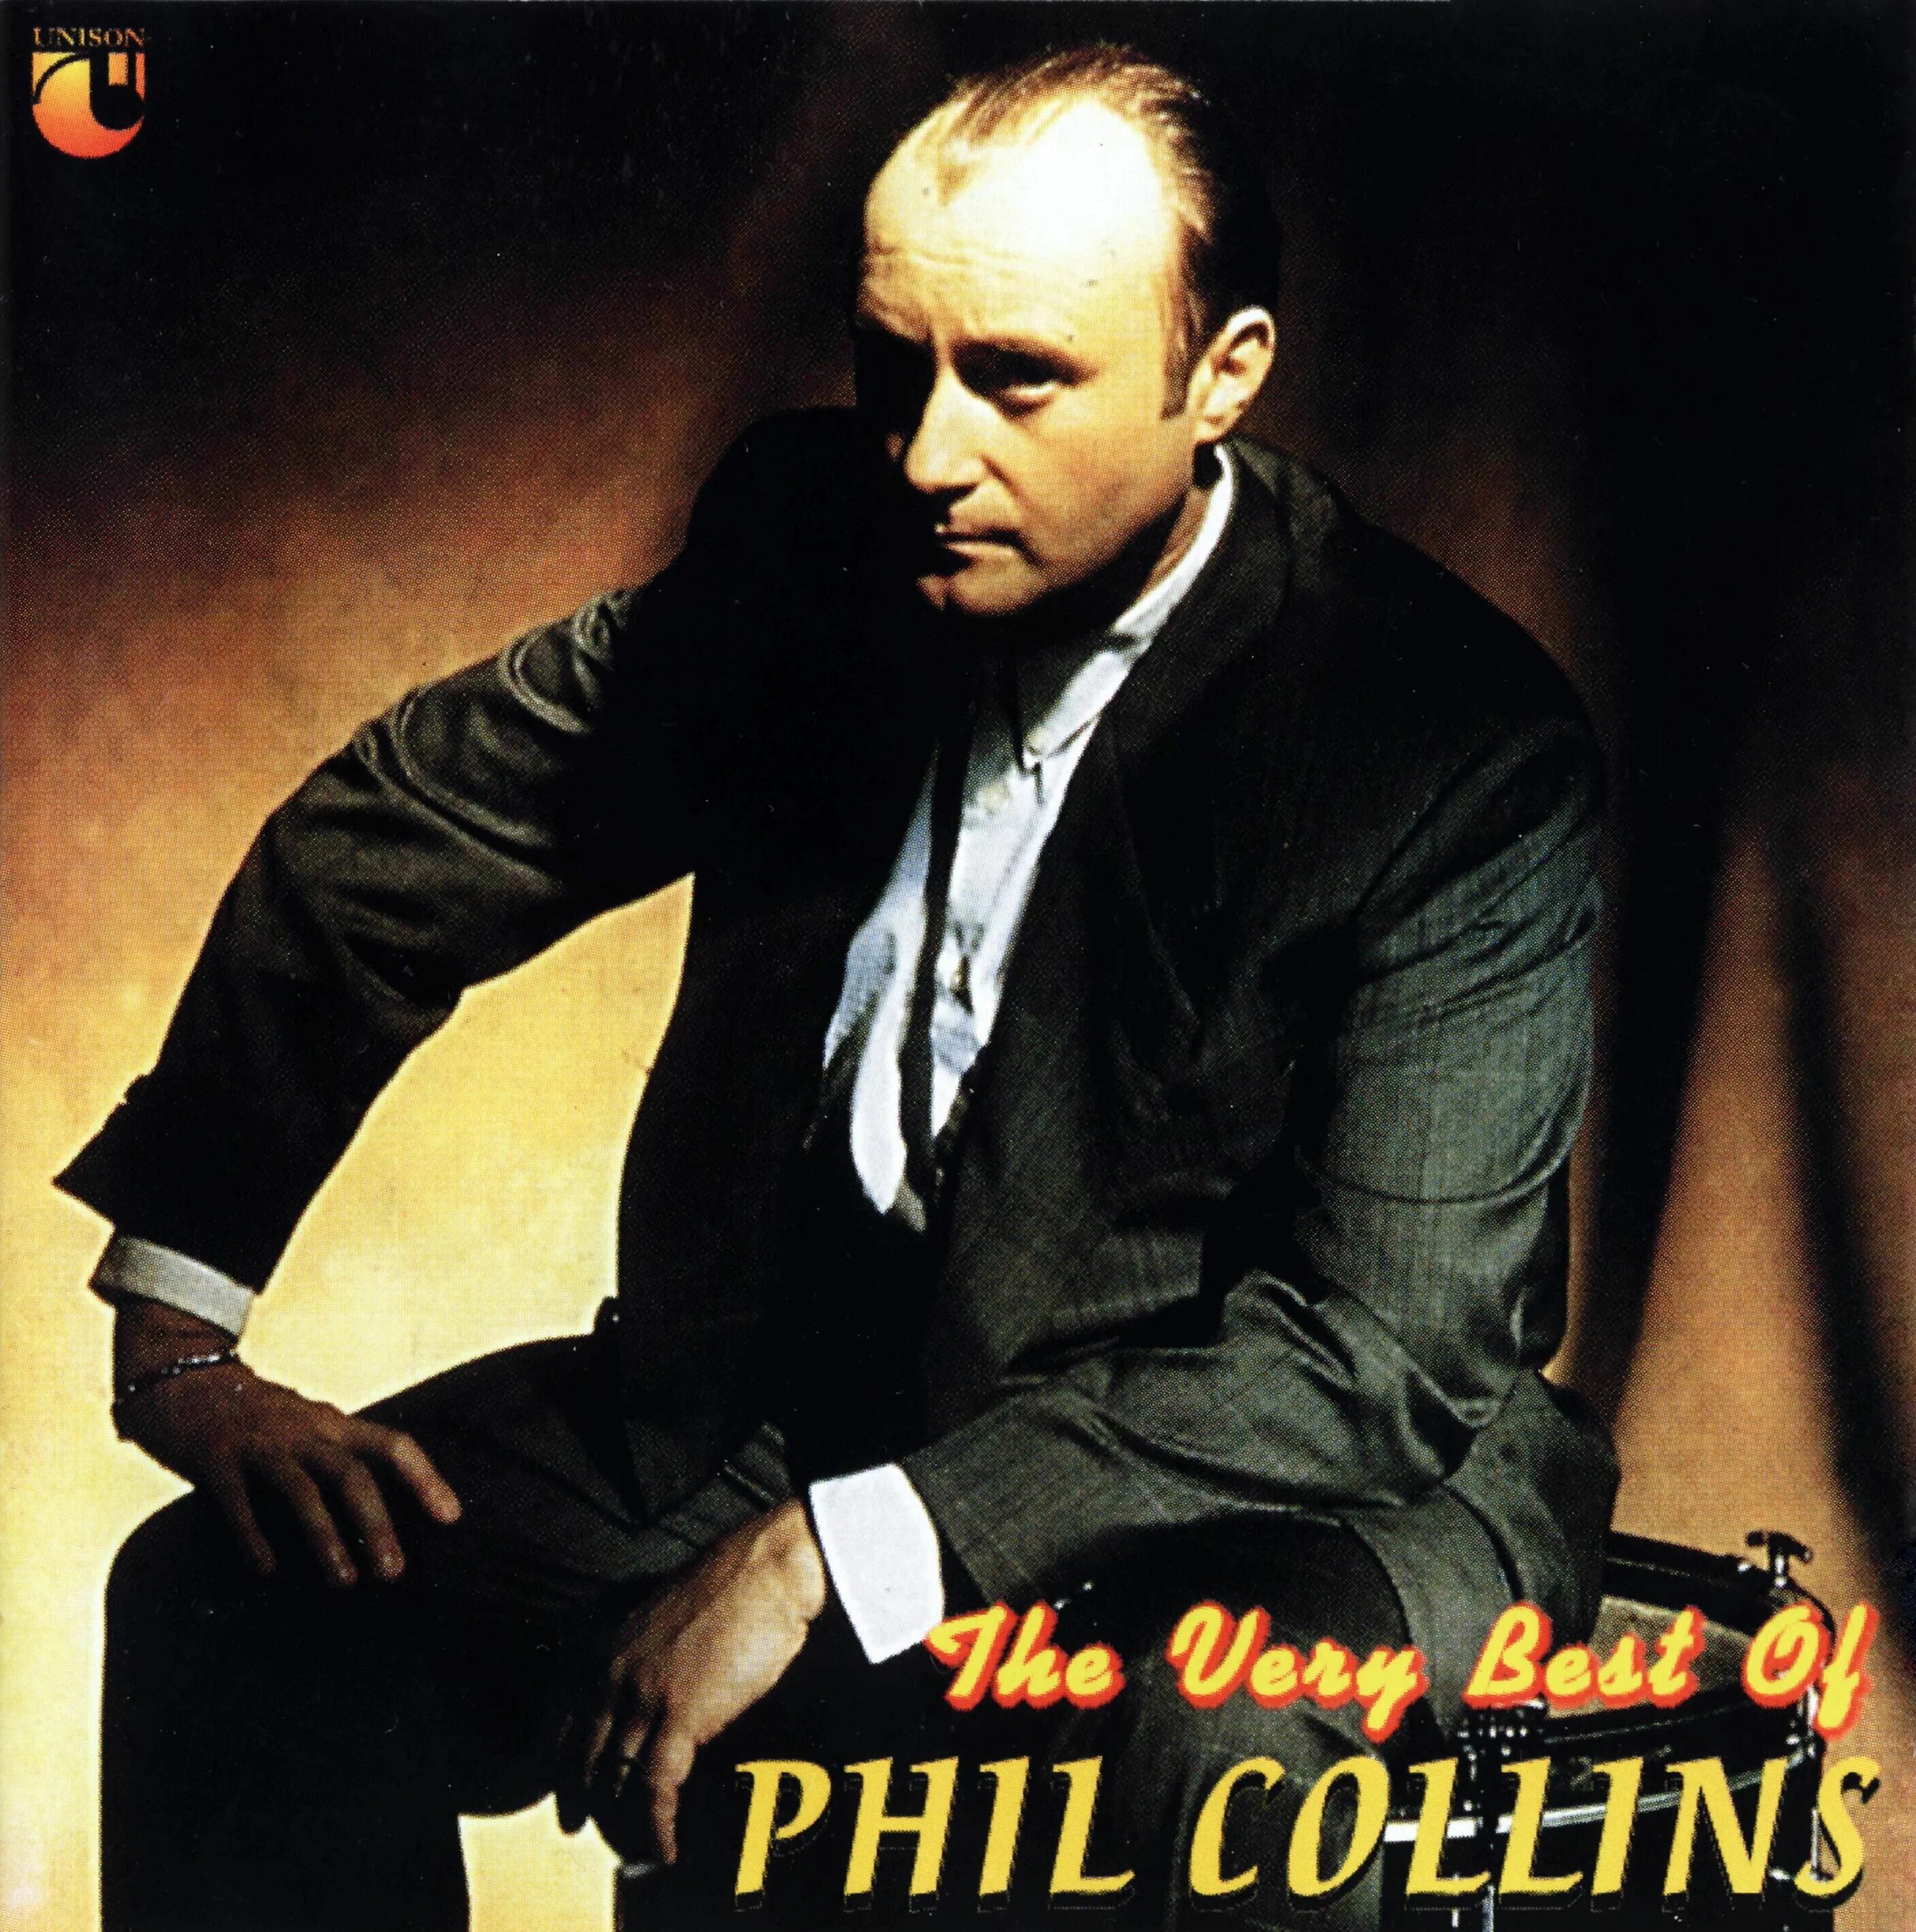 Фил коллинз альбомы. Фил Коллинз 1992. Phil Collins обложка. Phil Collins обложки альбомов. Phil Collins обложка диска.